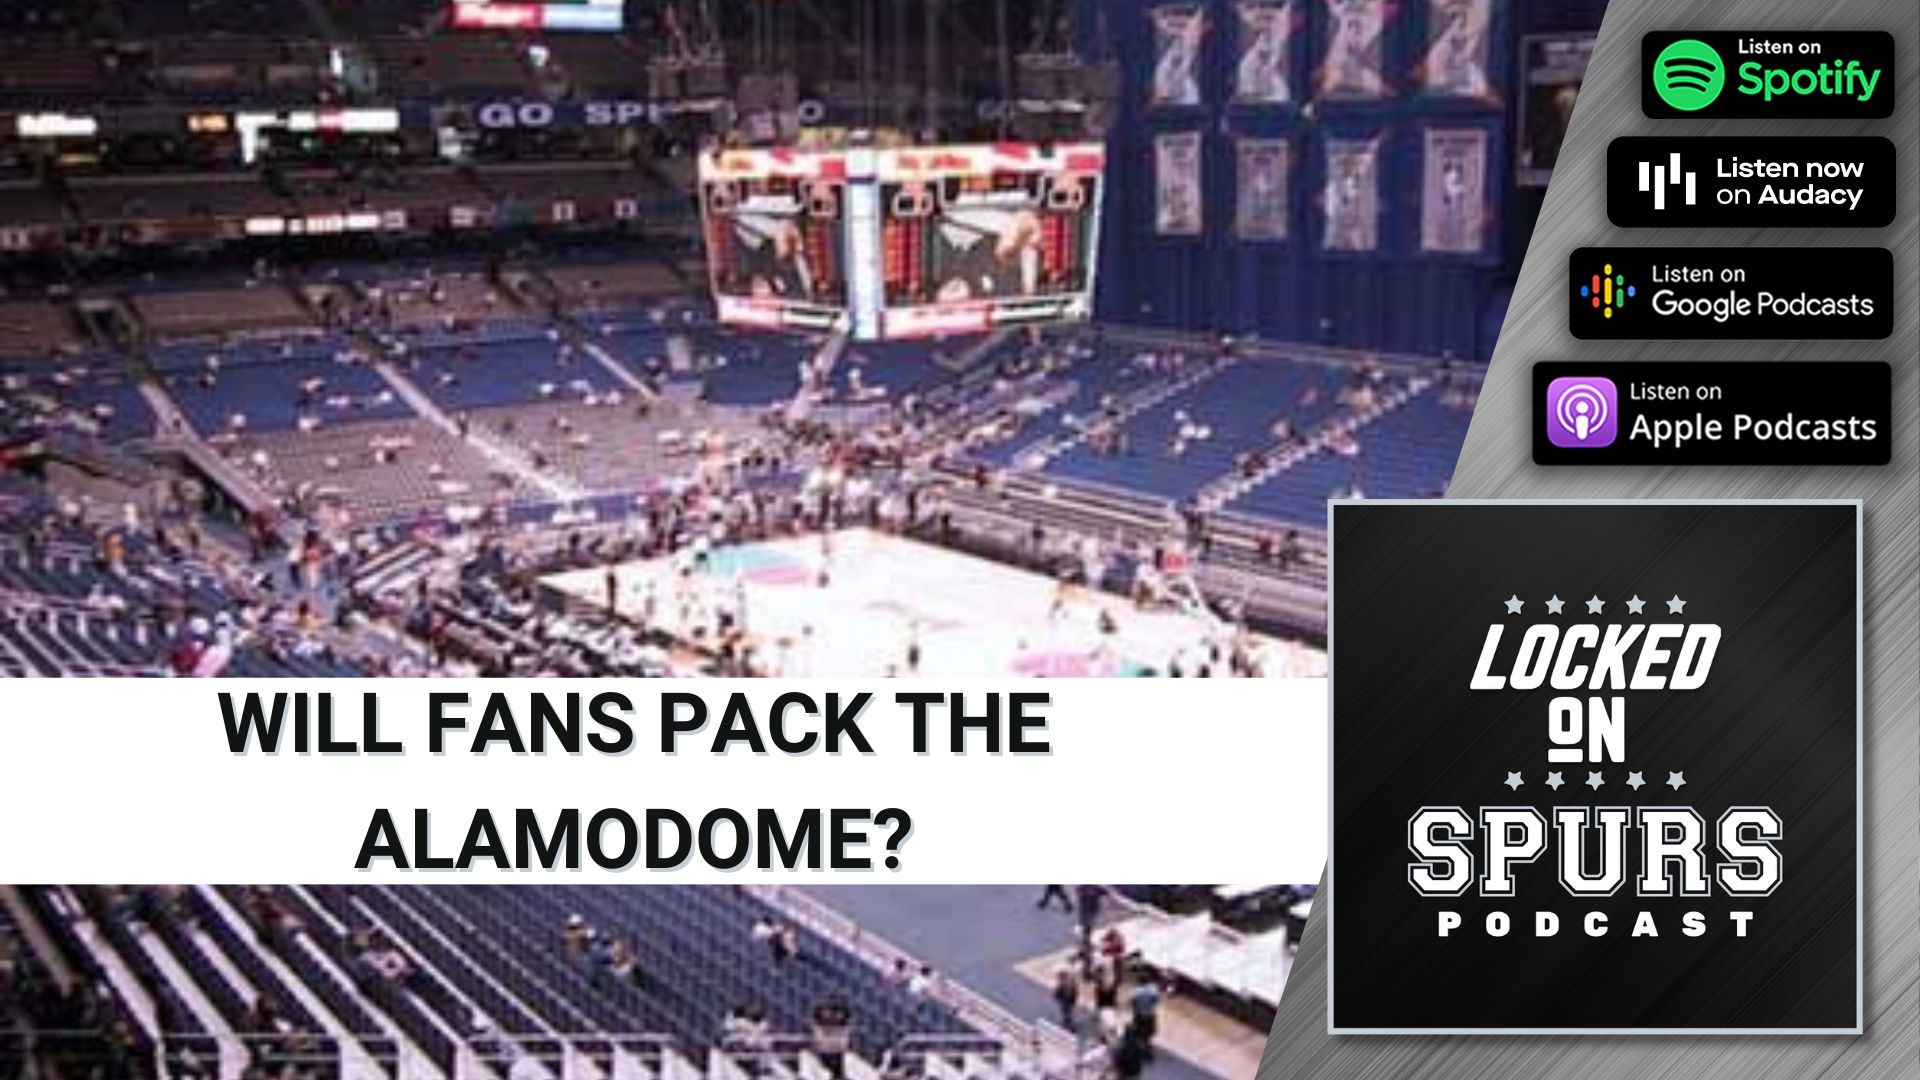 Will fans help break the NBA attendance record next season?